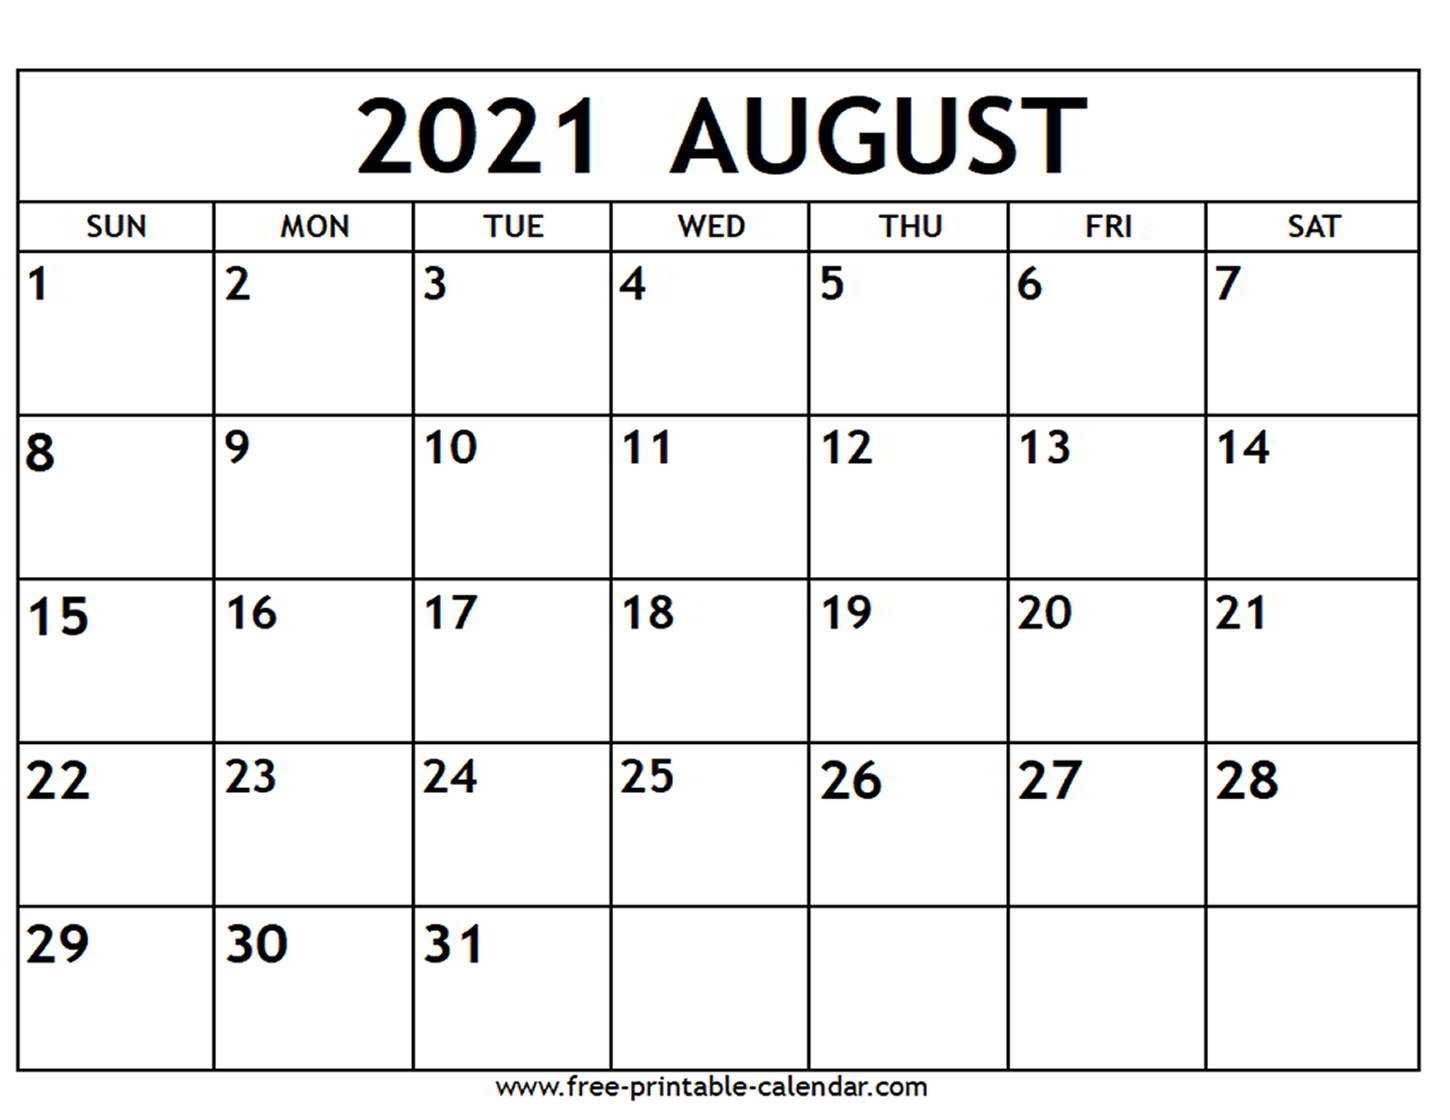 August 2021 Calendar - Free-Printable-Calendar